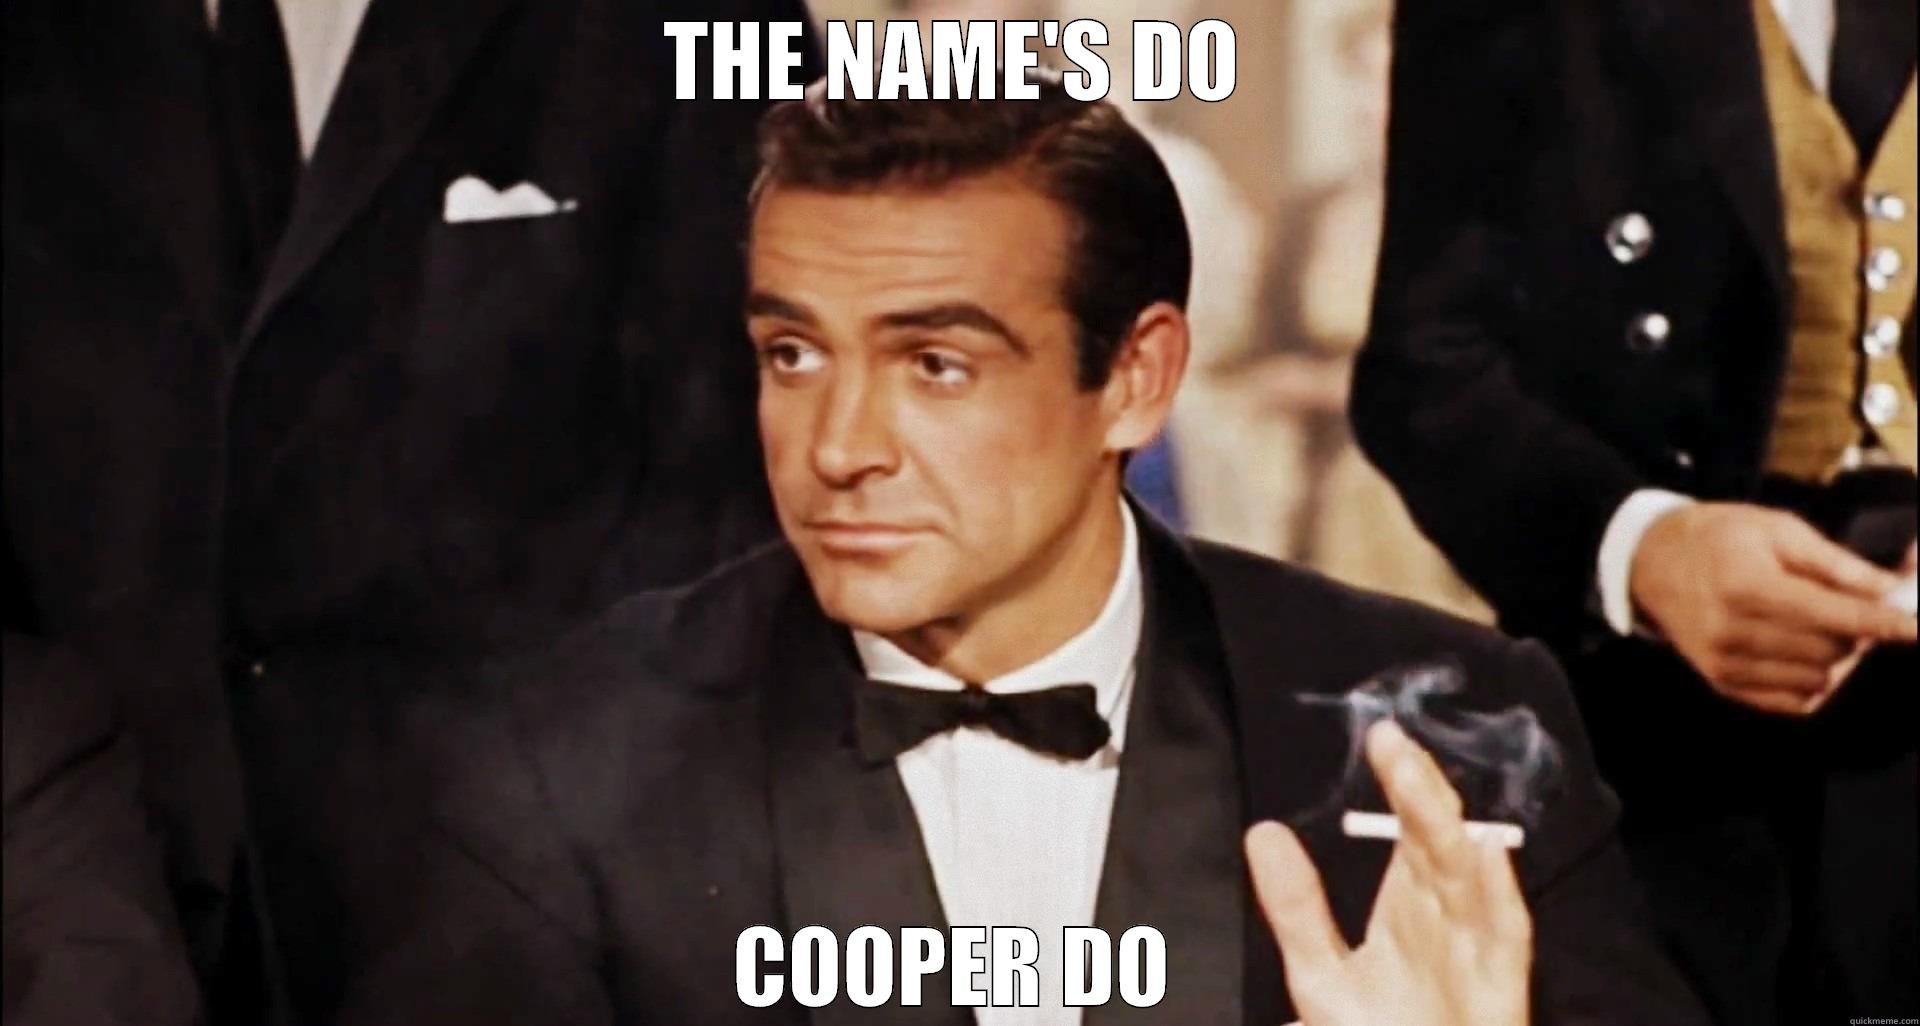 The Name's Bond - THE NAME'S DO COOPER DO Misc